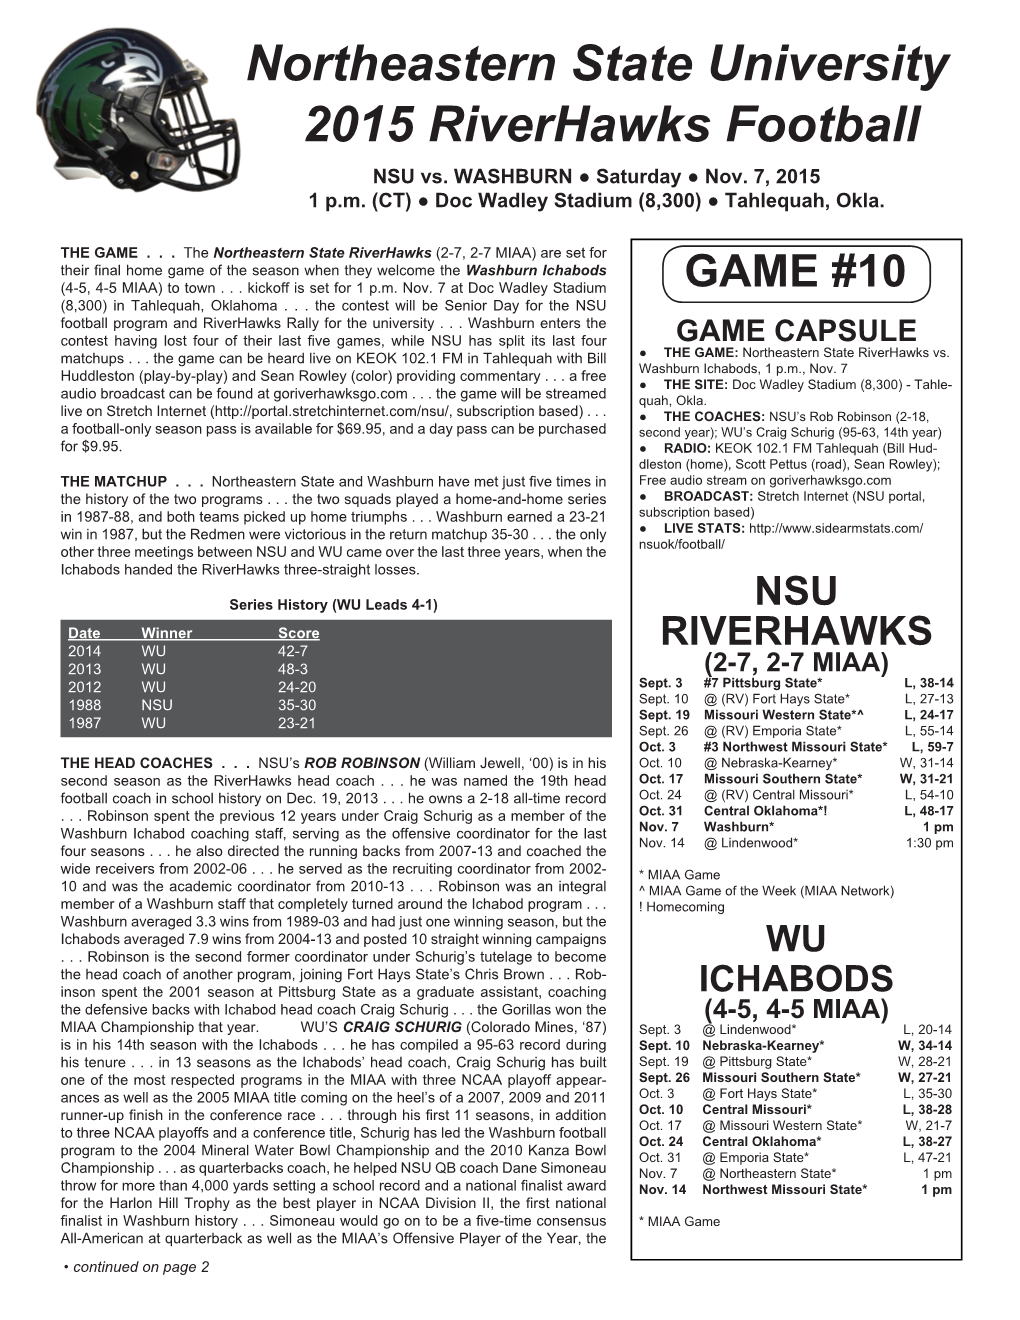 Northeastern State University 2015 Riverhawks Football NSU Vs